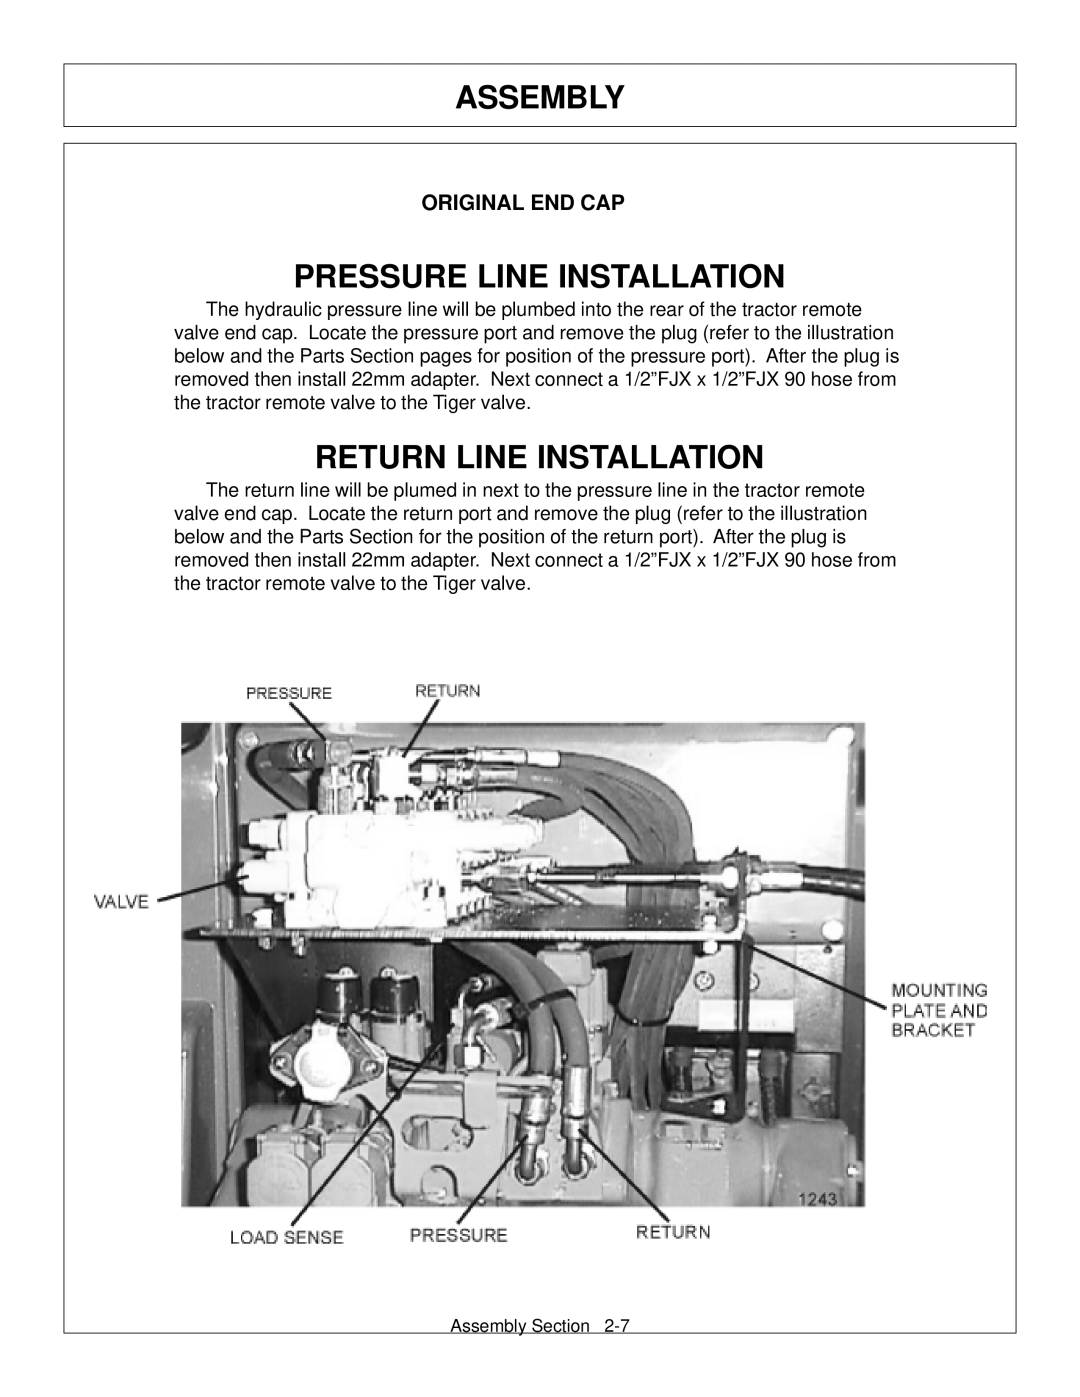 Tiger Products Co., Ltd JD 72-7520 manual Pressure Line Installation, Return Line Installation, Assembly, Original End Cap 